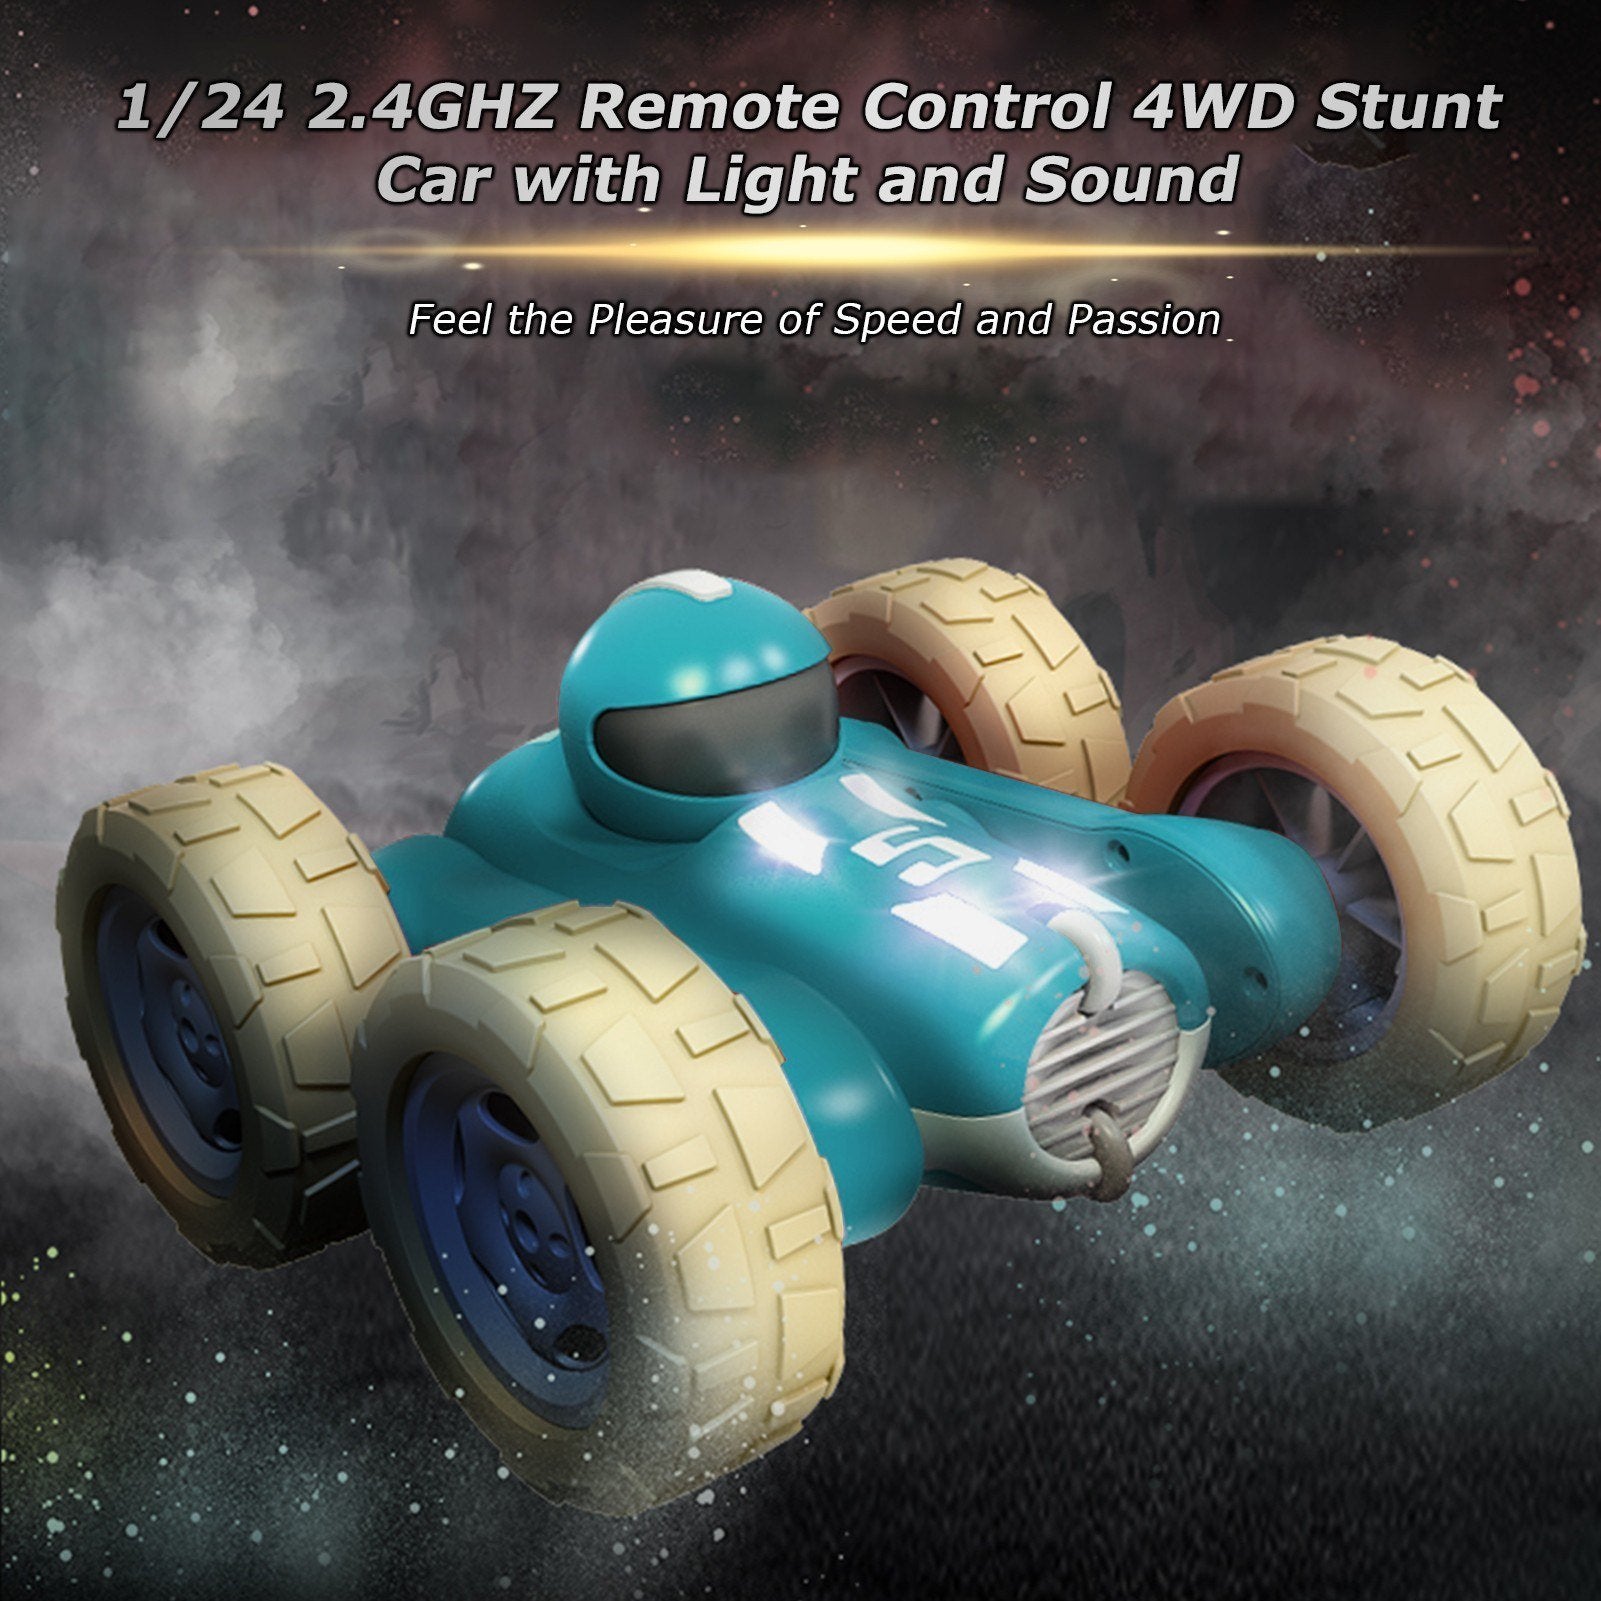 1/24 RC Car 4WD Stunt 2.4GHZ Remote Control 360°Rotating Auto Demo